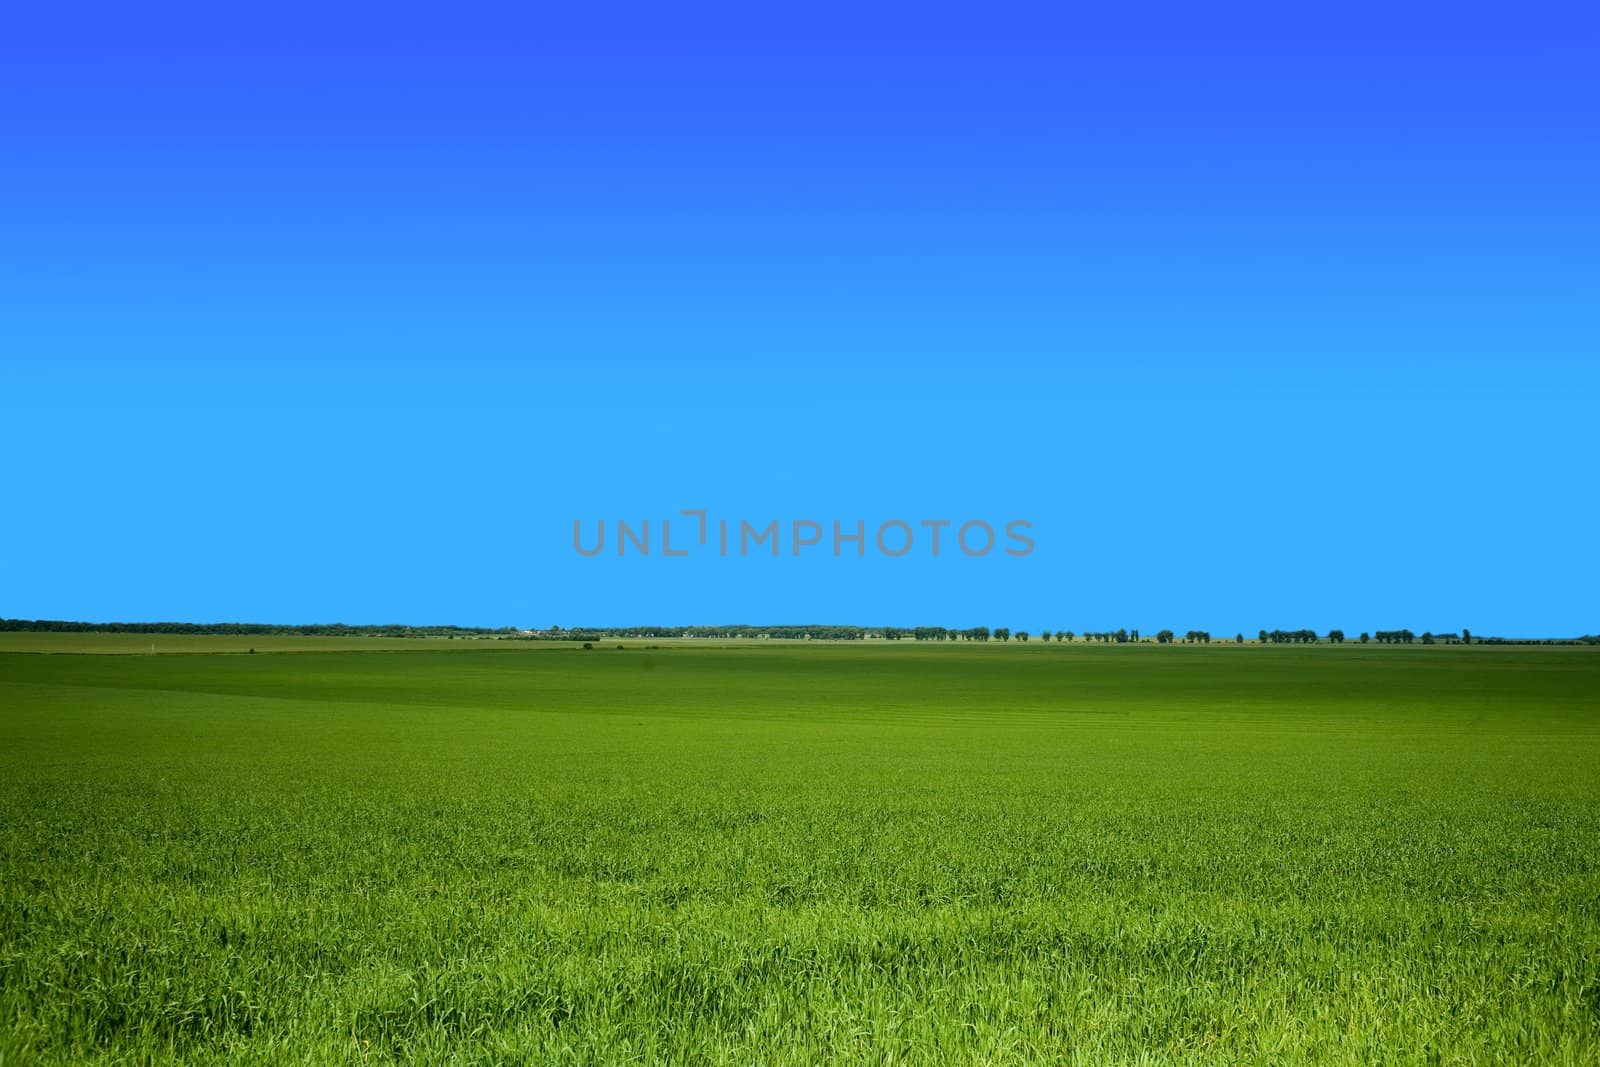 An image of green field under blue sky